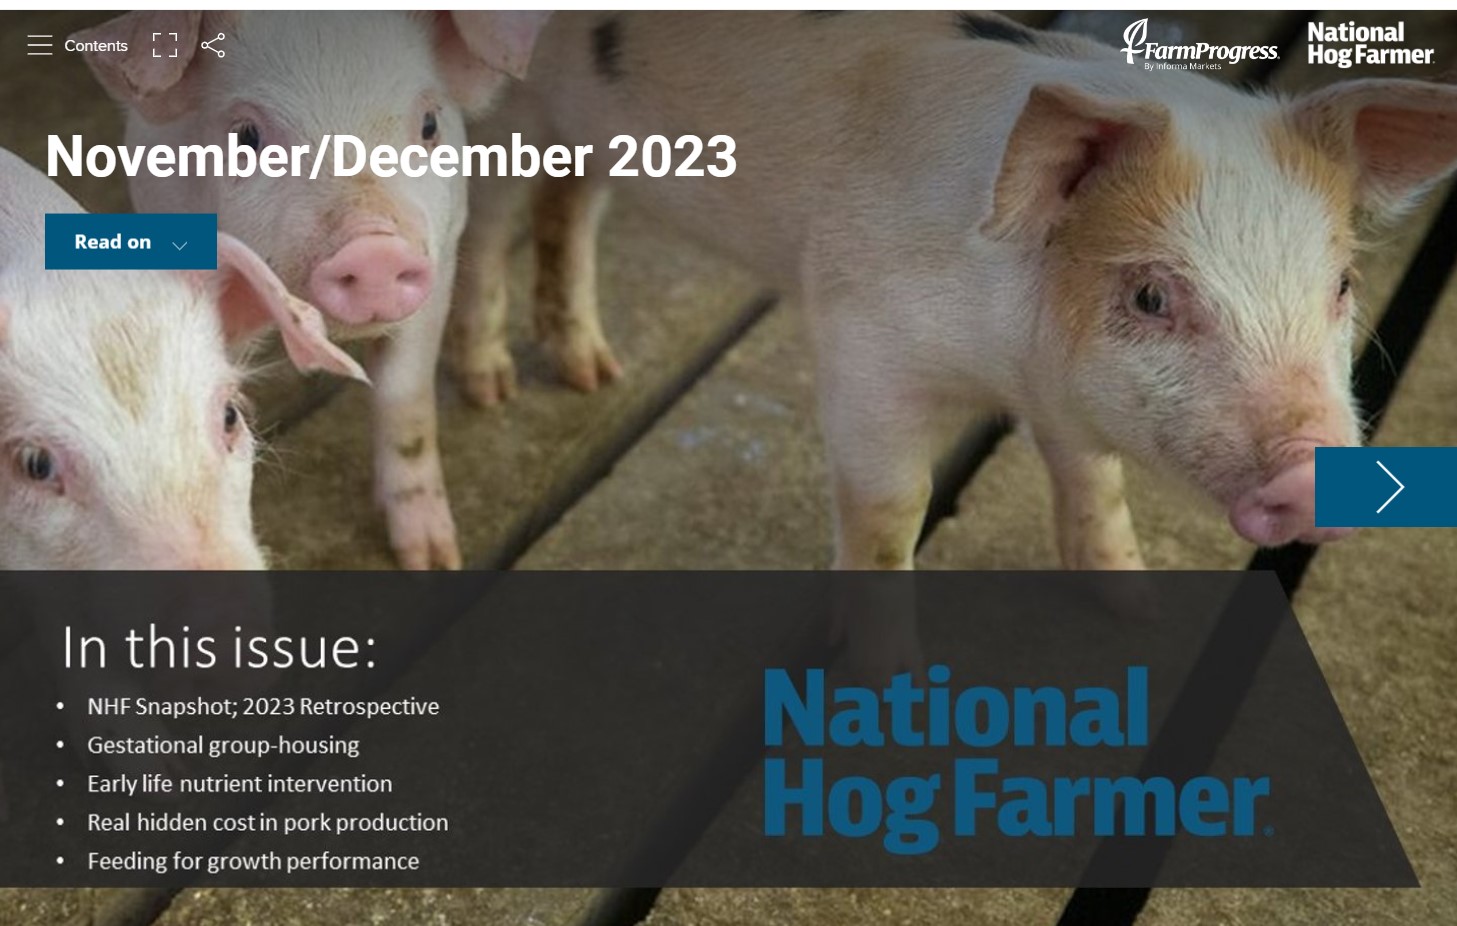 November/December edition of National Hog Farmer